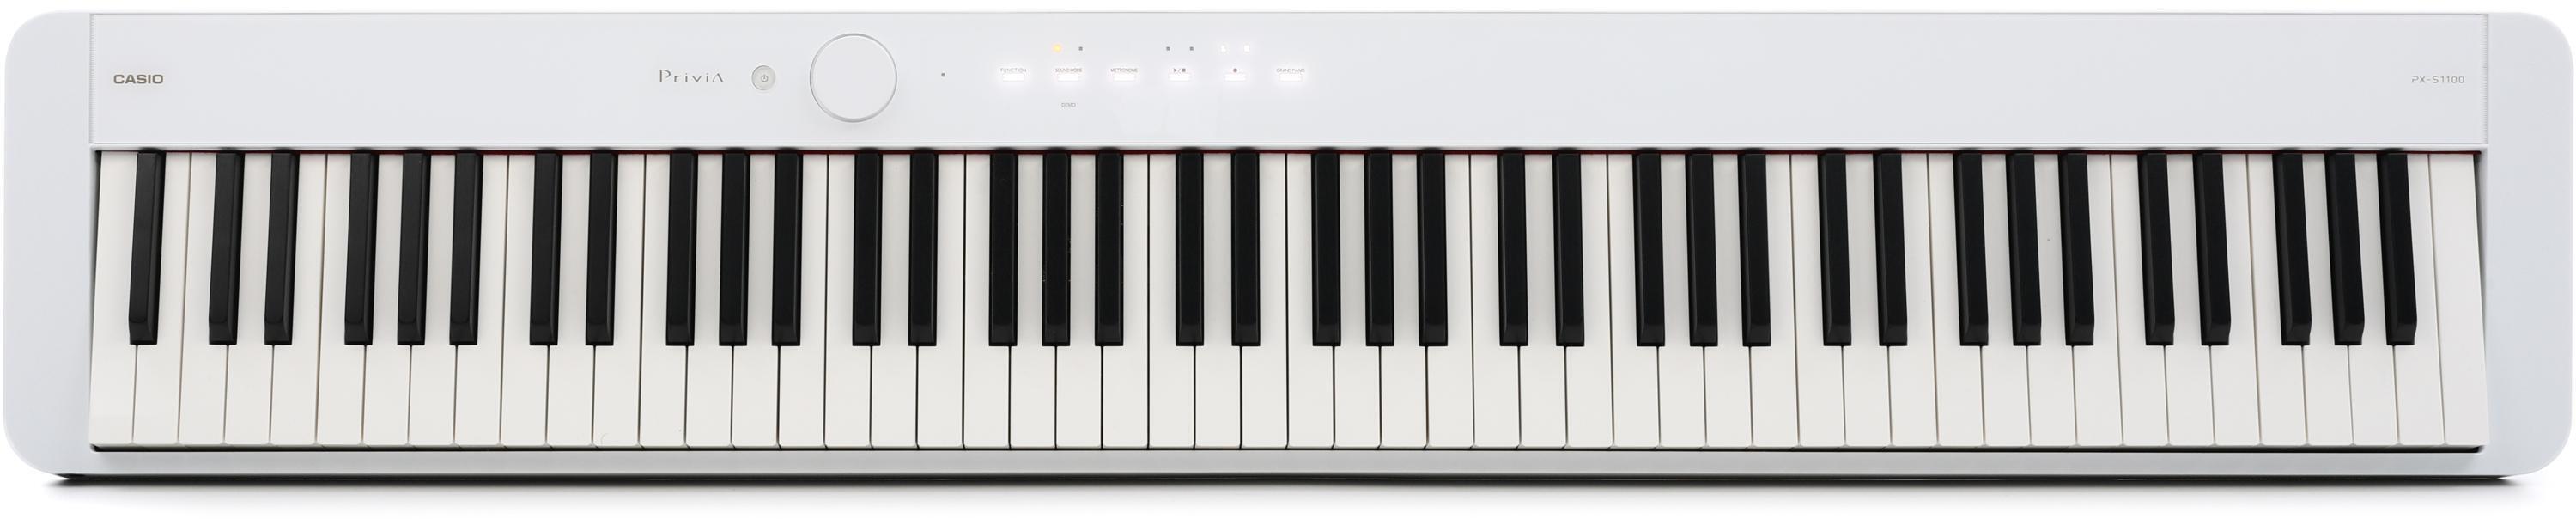 Casio Privia PX-S1100 Digital Piano - White | Sweetwater